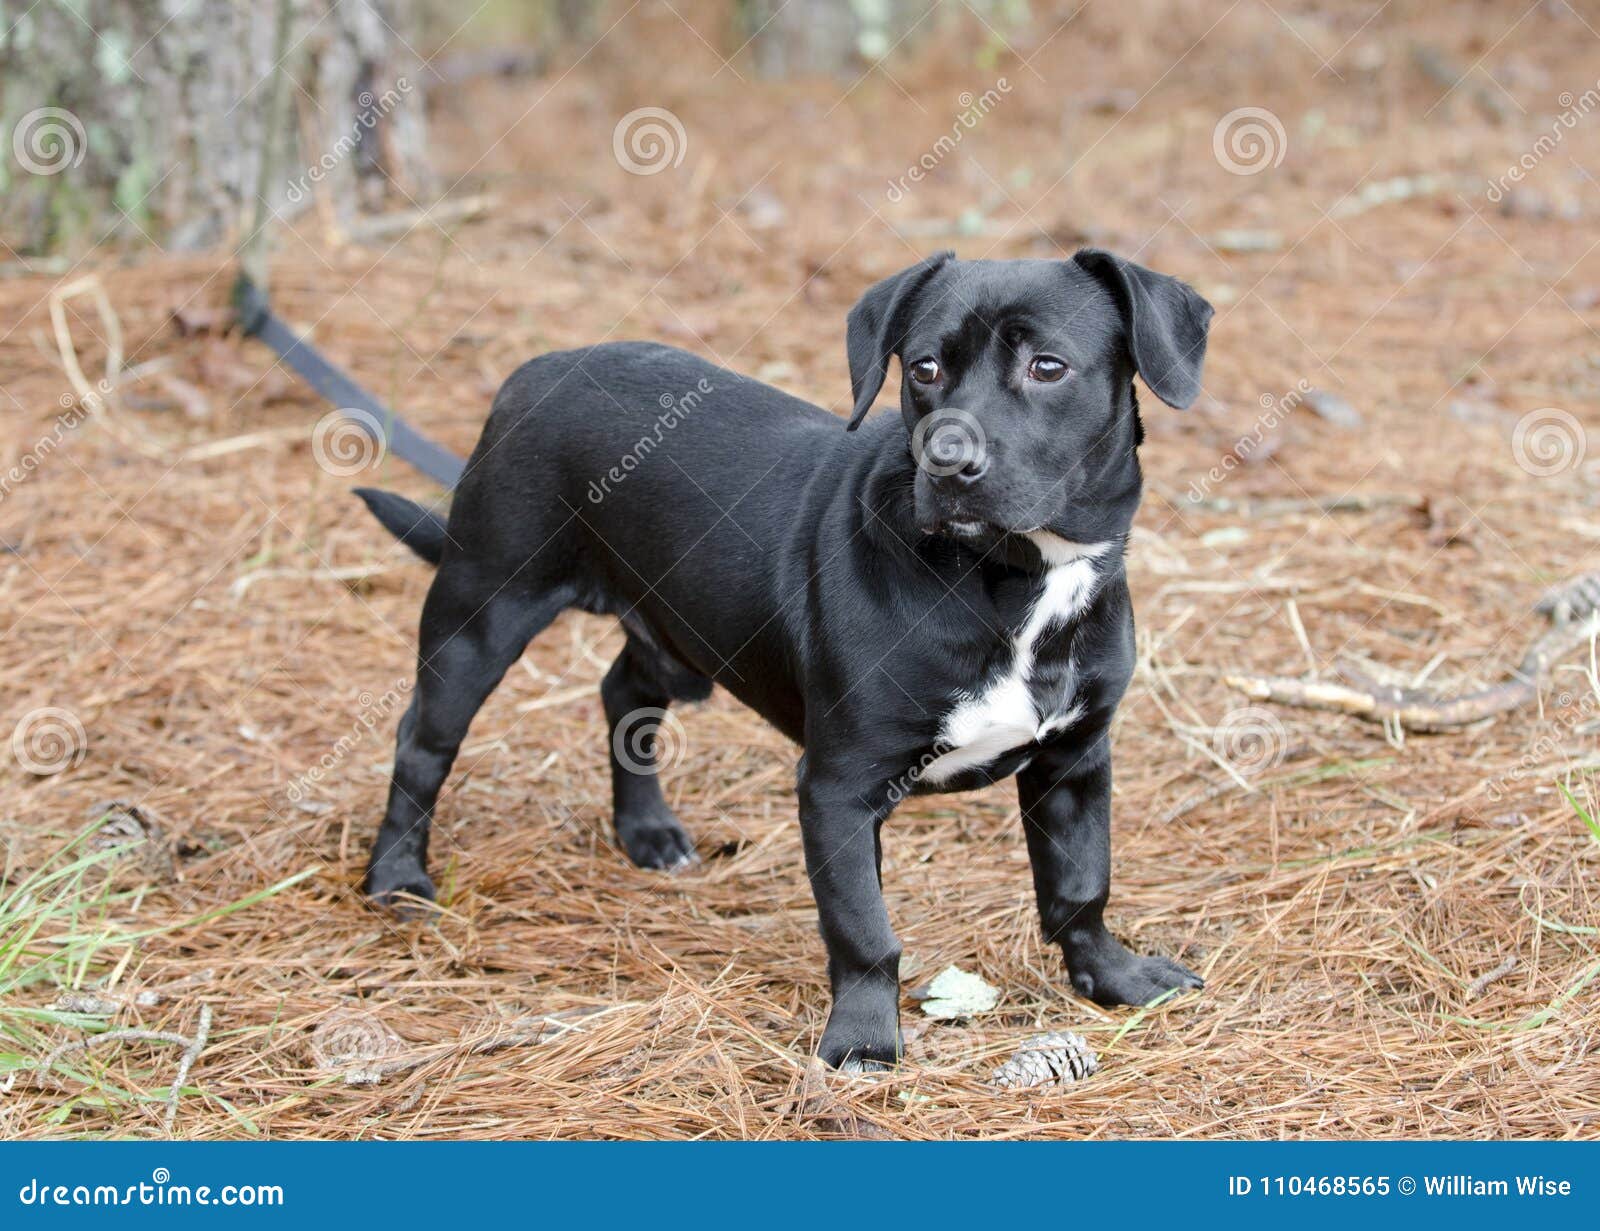 Cute Black Beagle Dachshund Mixed Breed Dog Mutt Stock Image